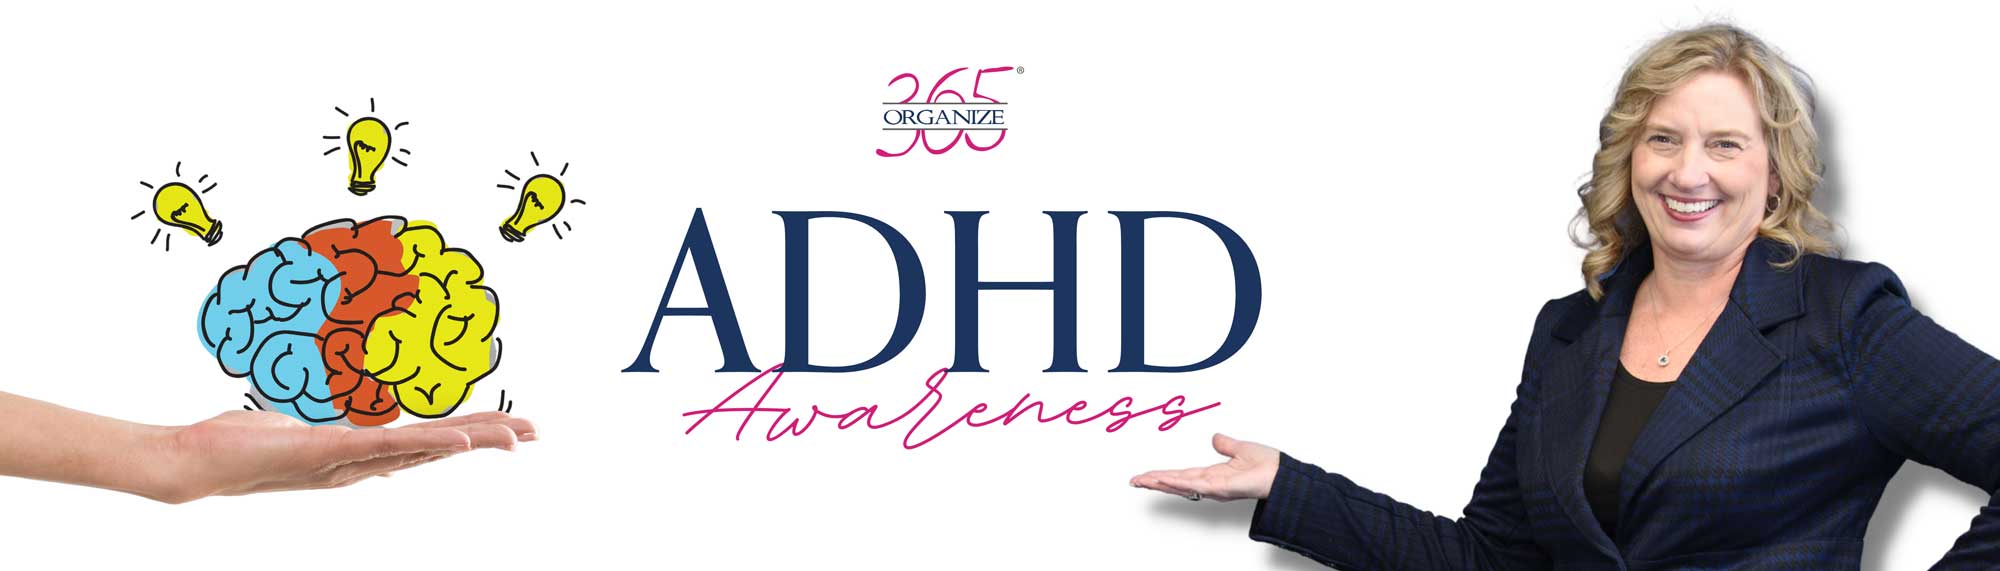 ADHD-Awareness-Banner